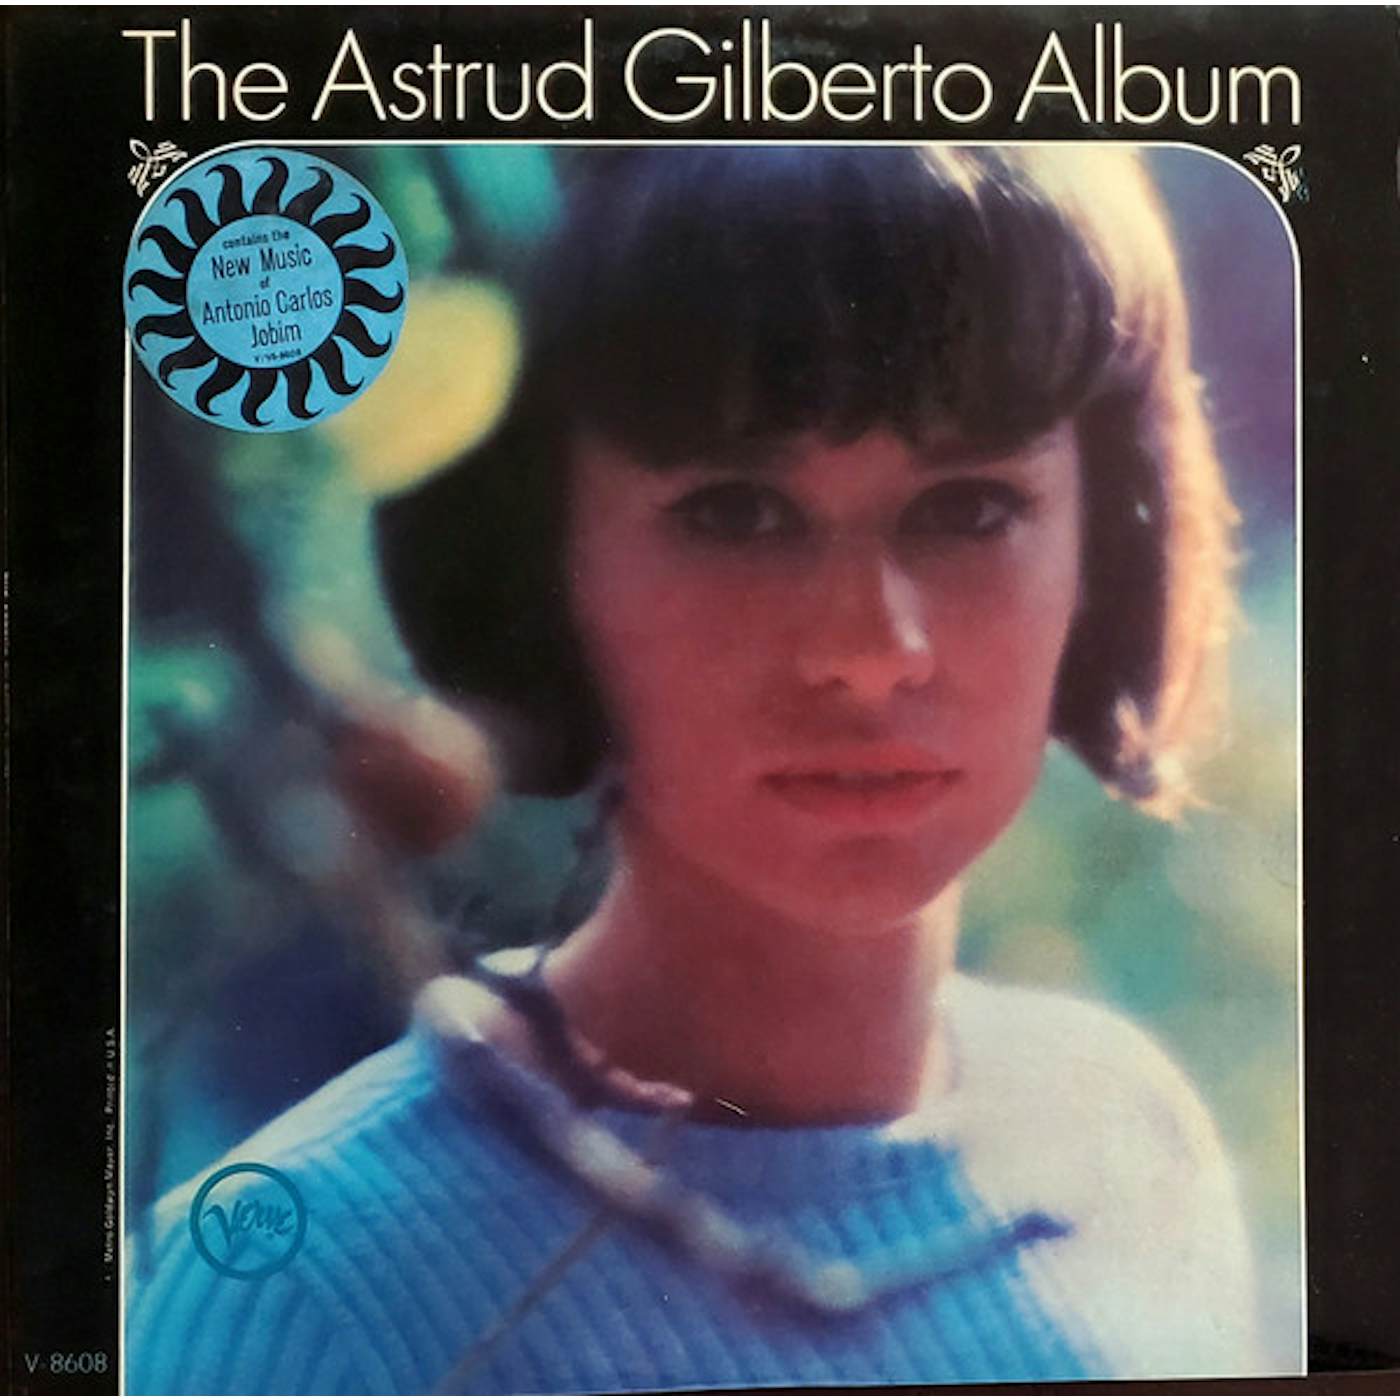 ASTRUD GILBERTO ALBUM Vinyl Record